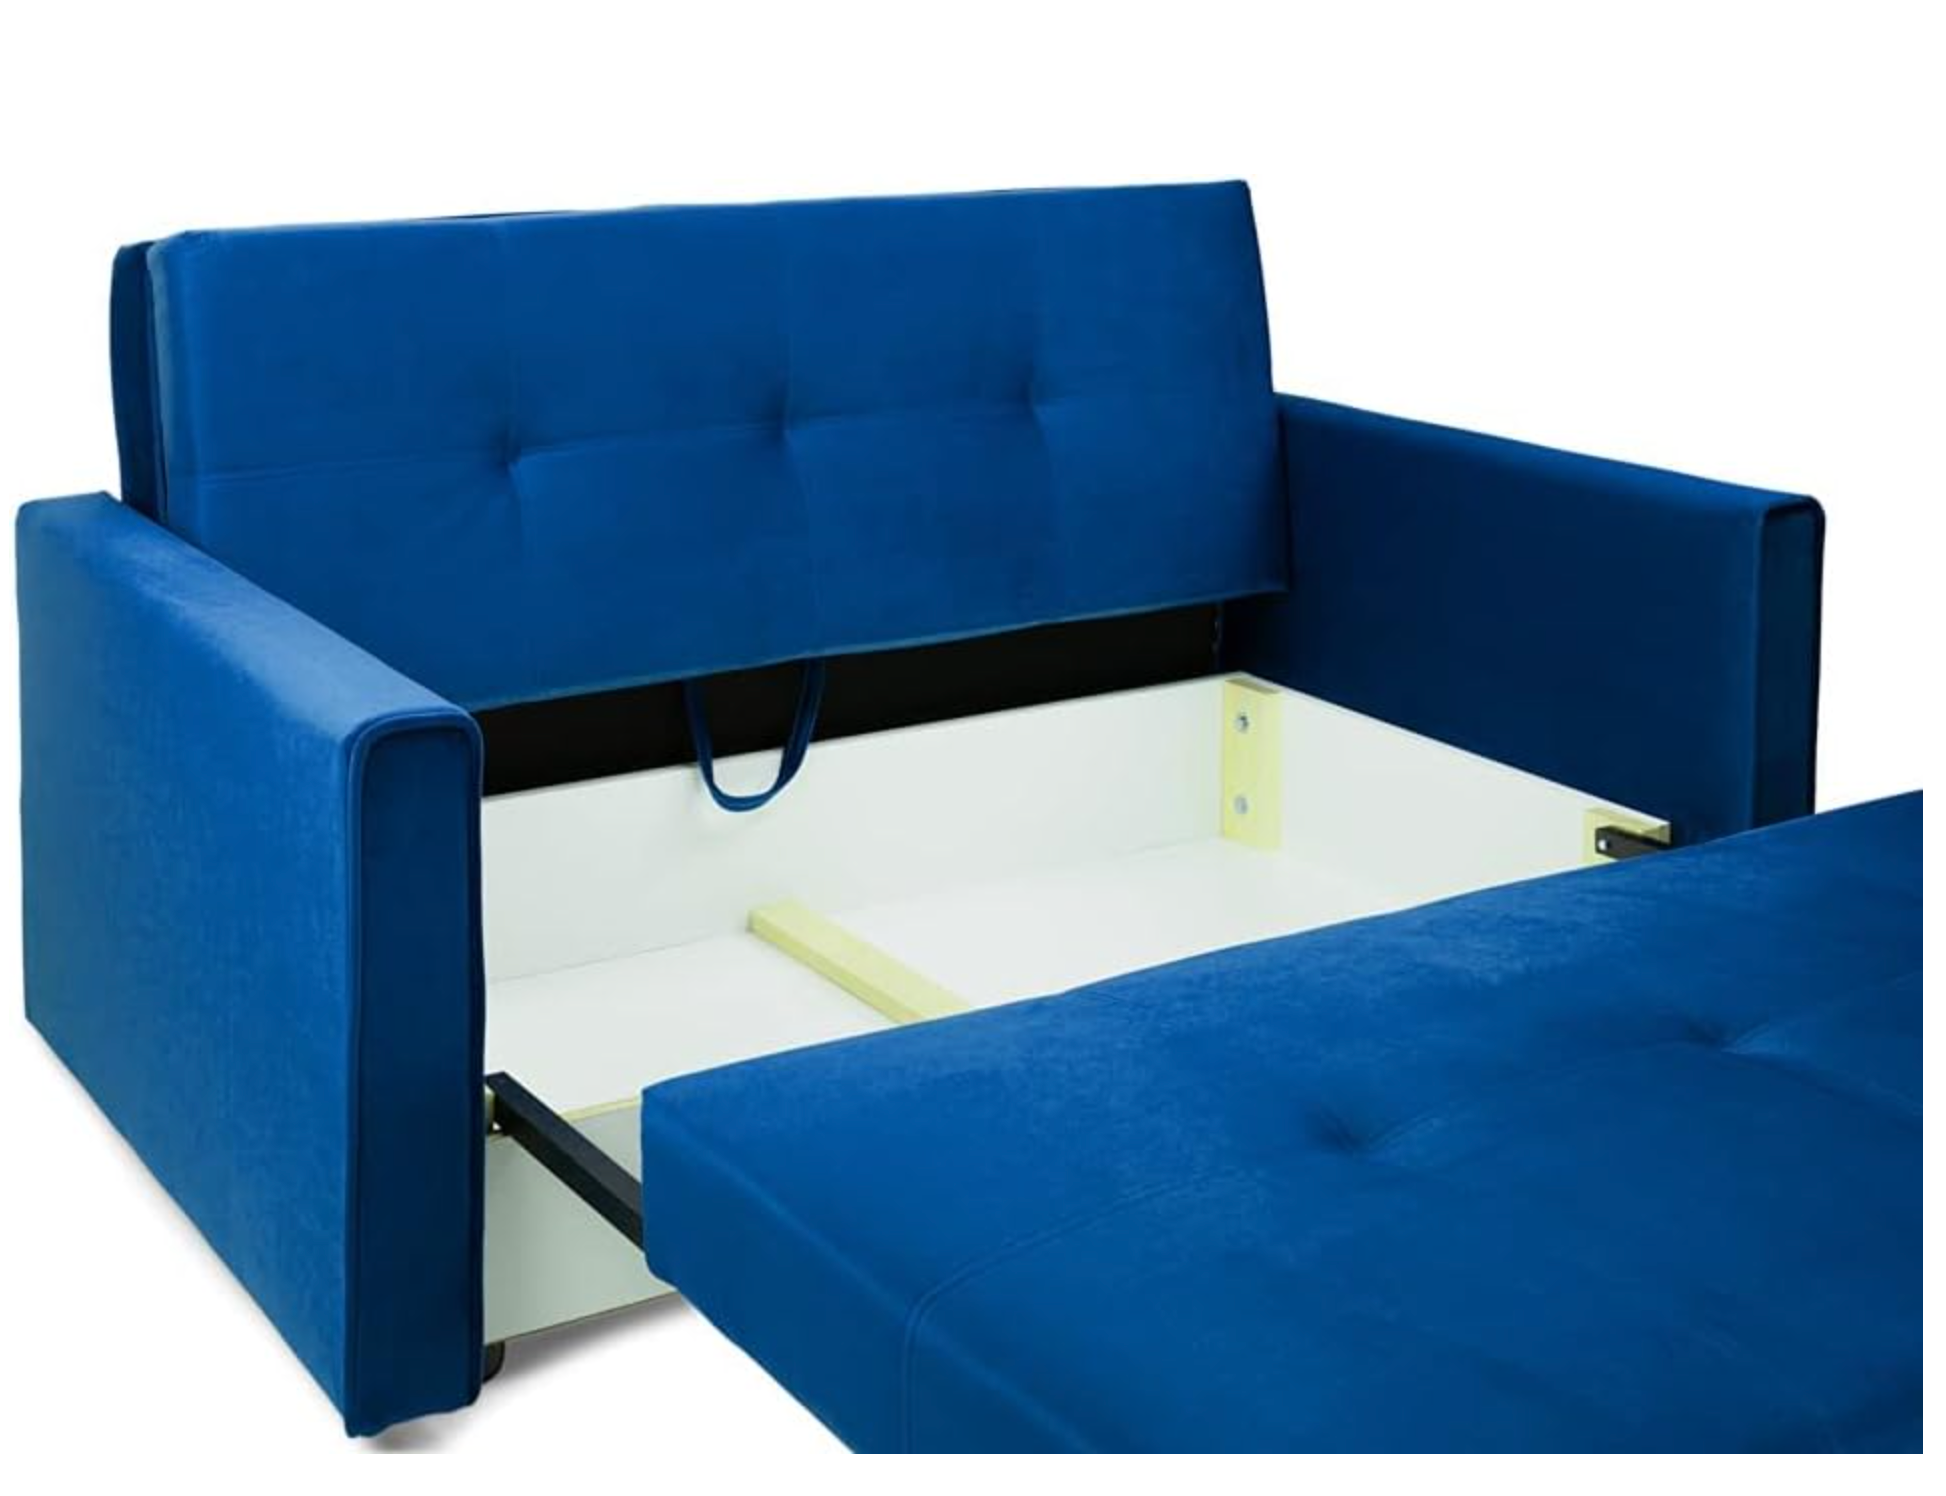 Vienna 2 Seater Sofa Bed With Storage Navy Blue Velvet Fabric